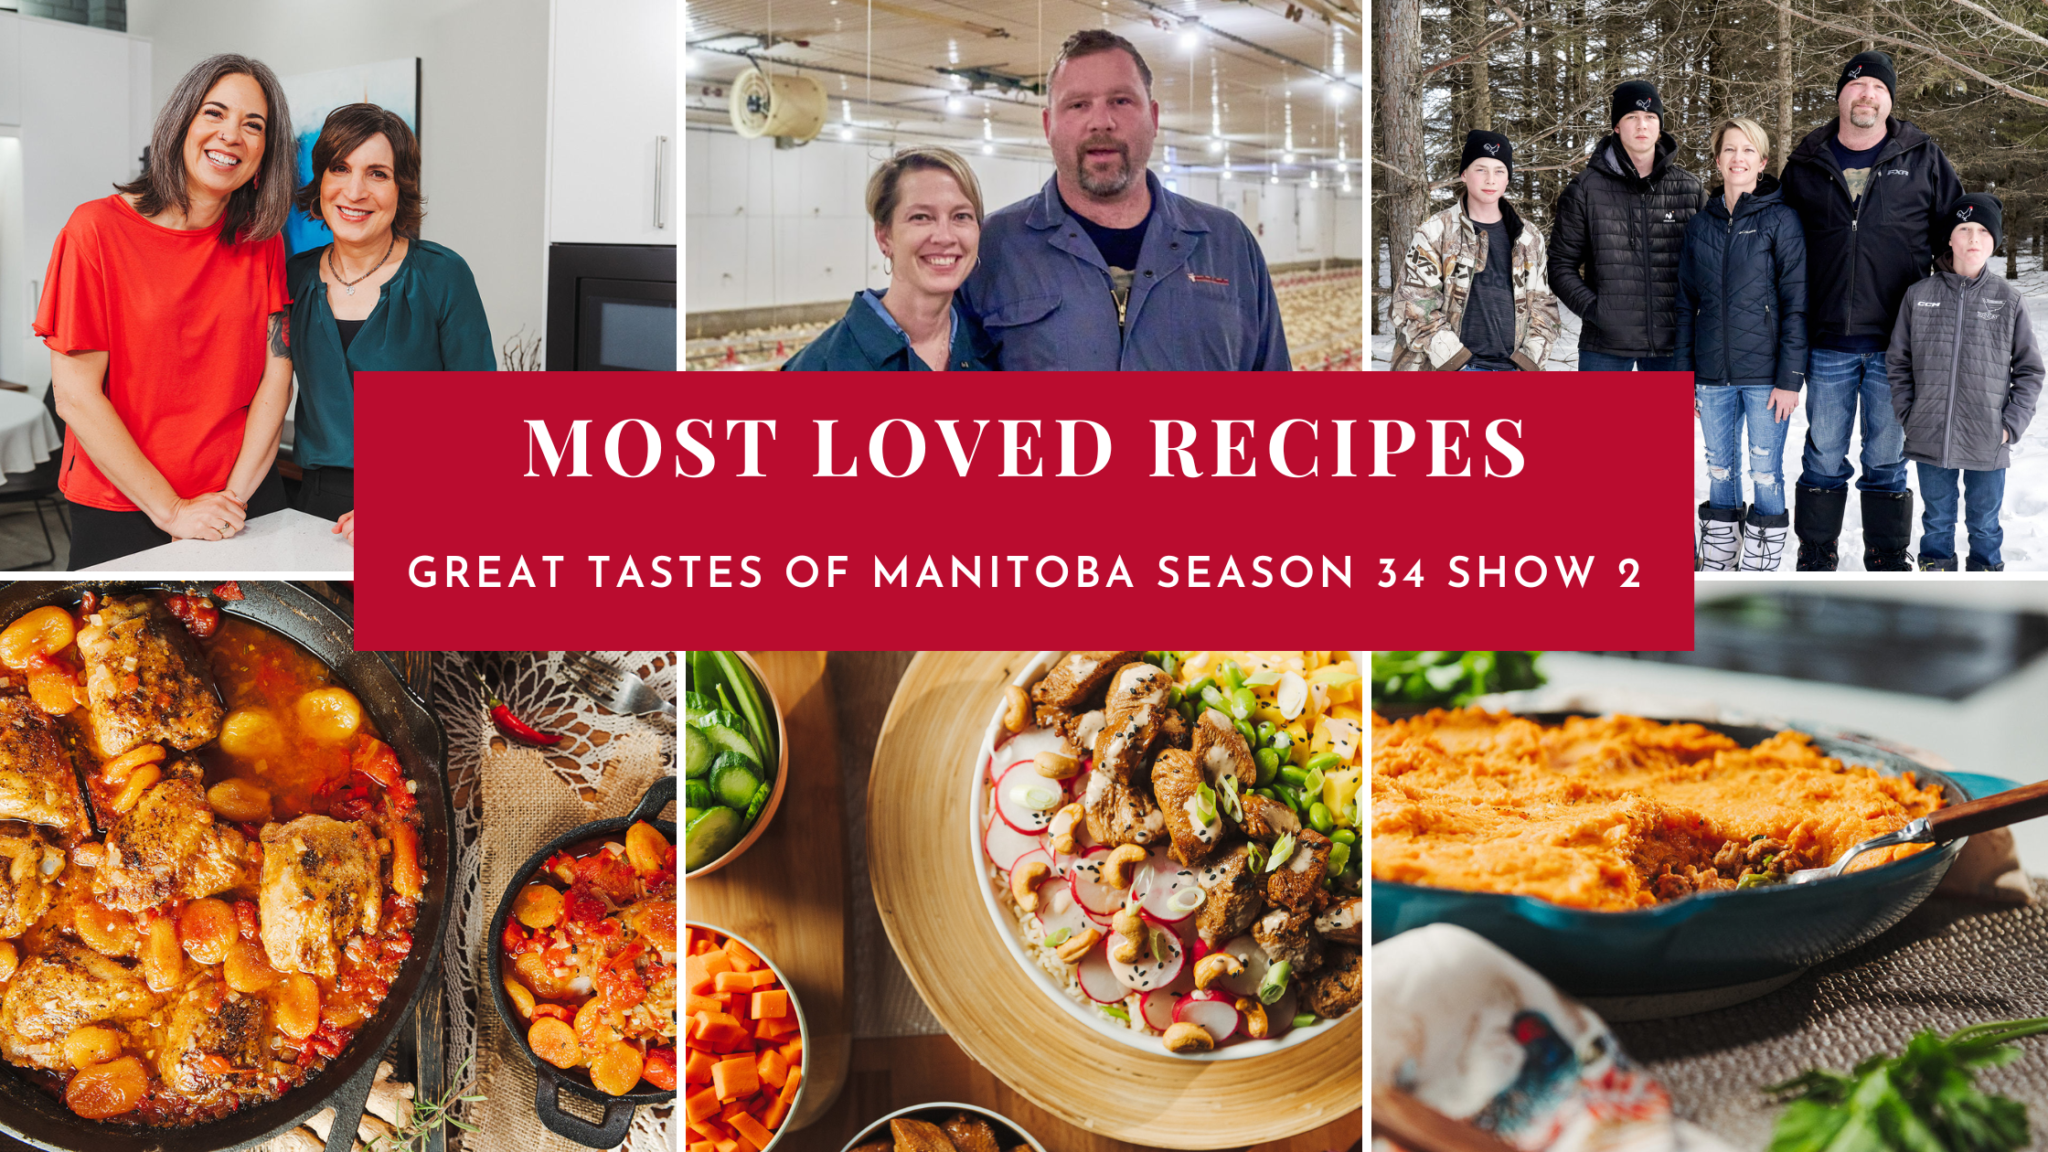 Great Tastes of Manitoba Season 34 Show 2: Most Loved Recipes